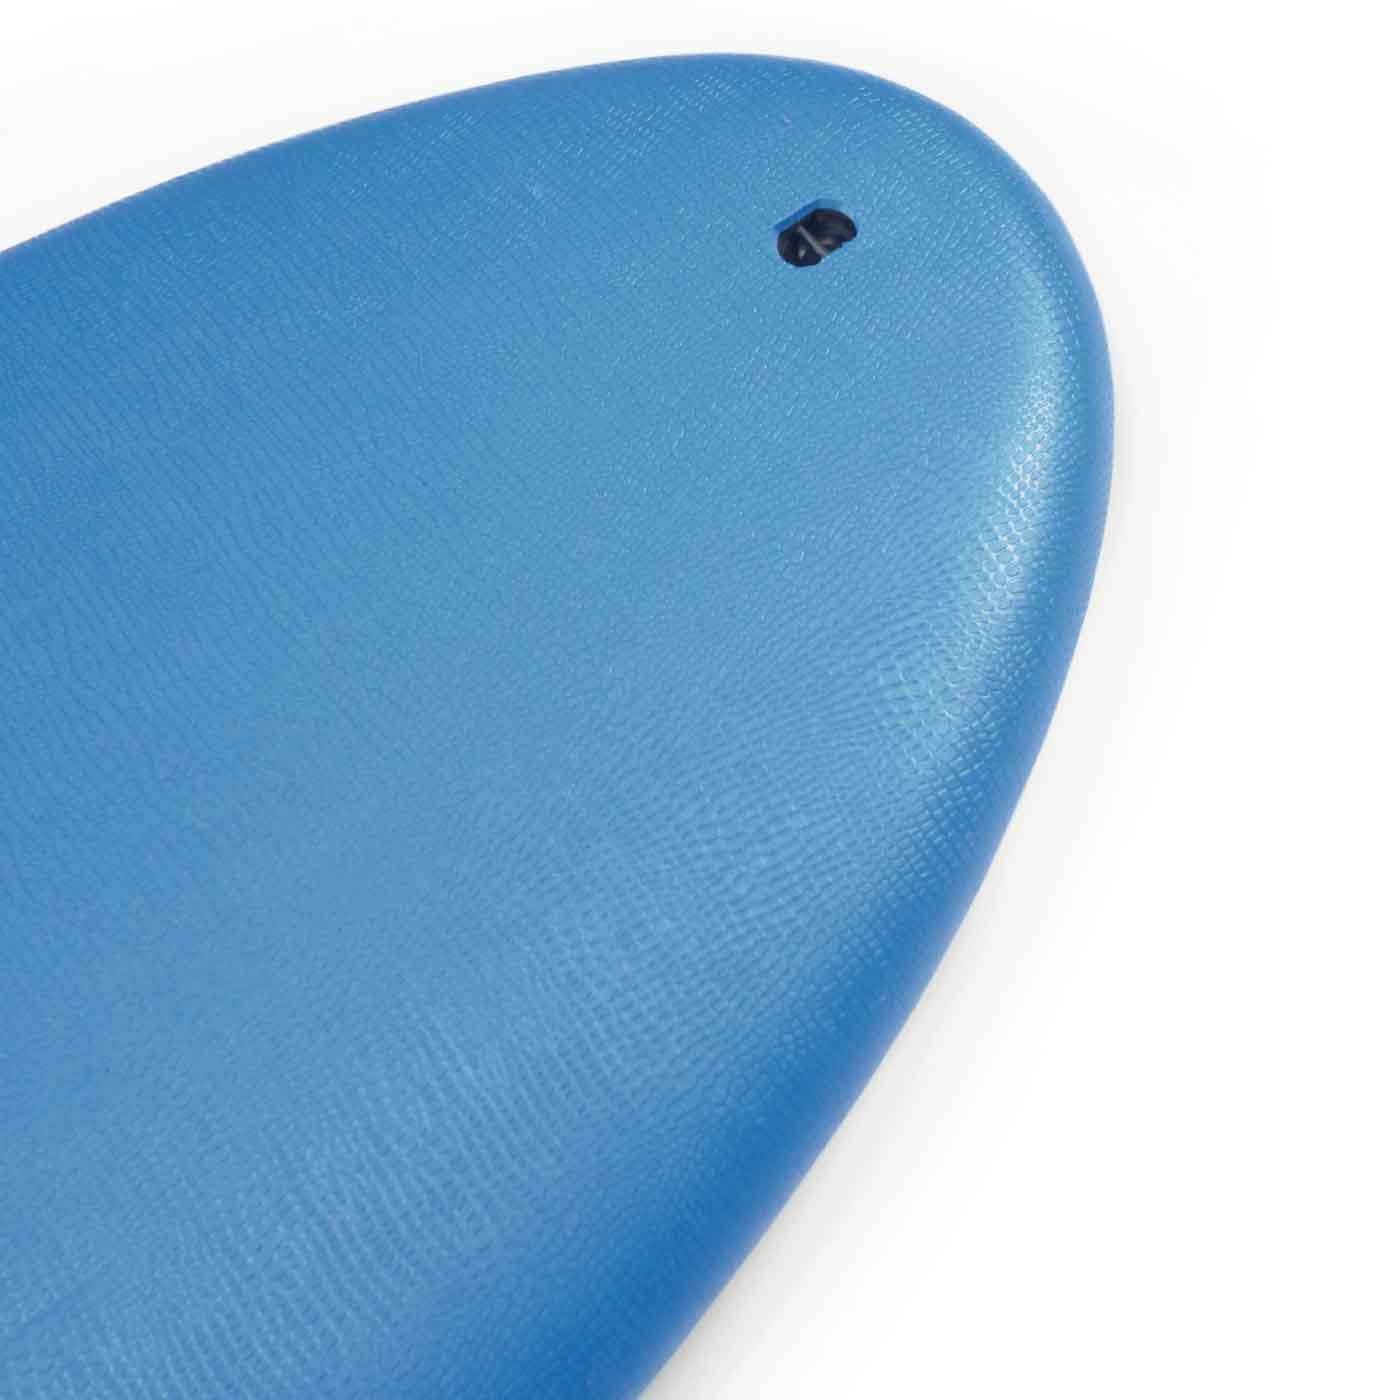 softdogsurf grate dane 6'2 soft top surf board tail leash plug